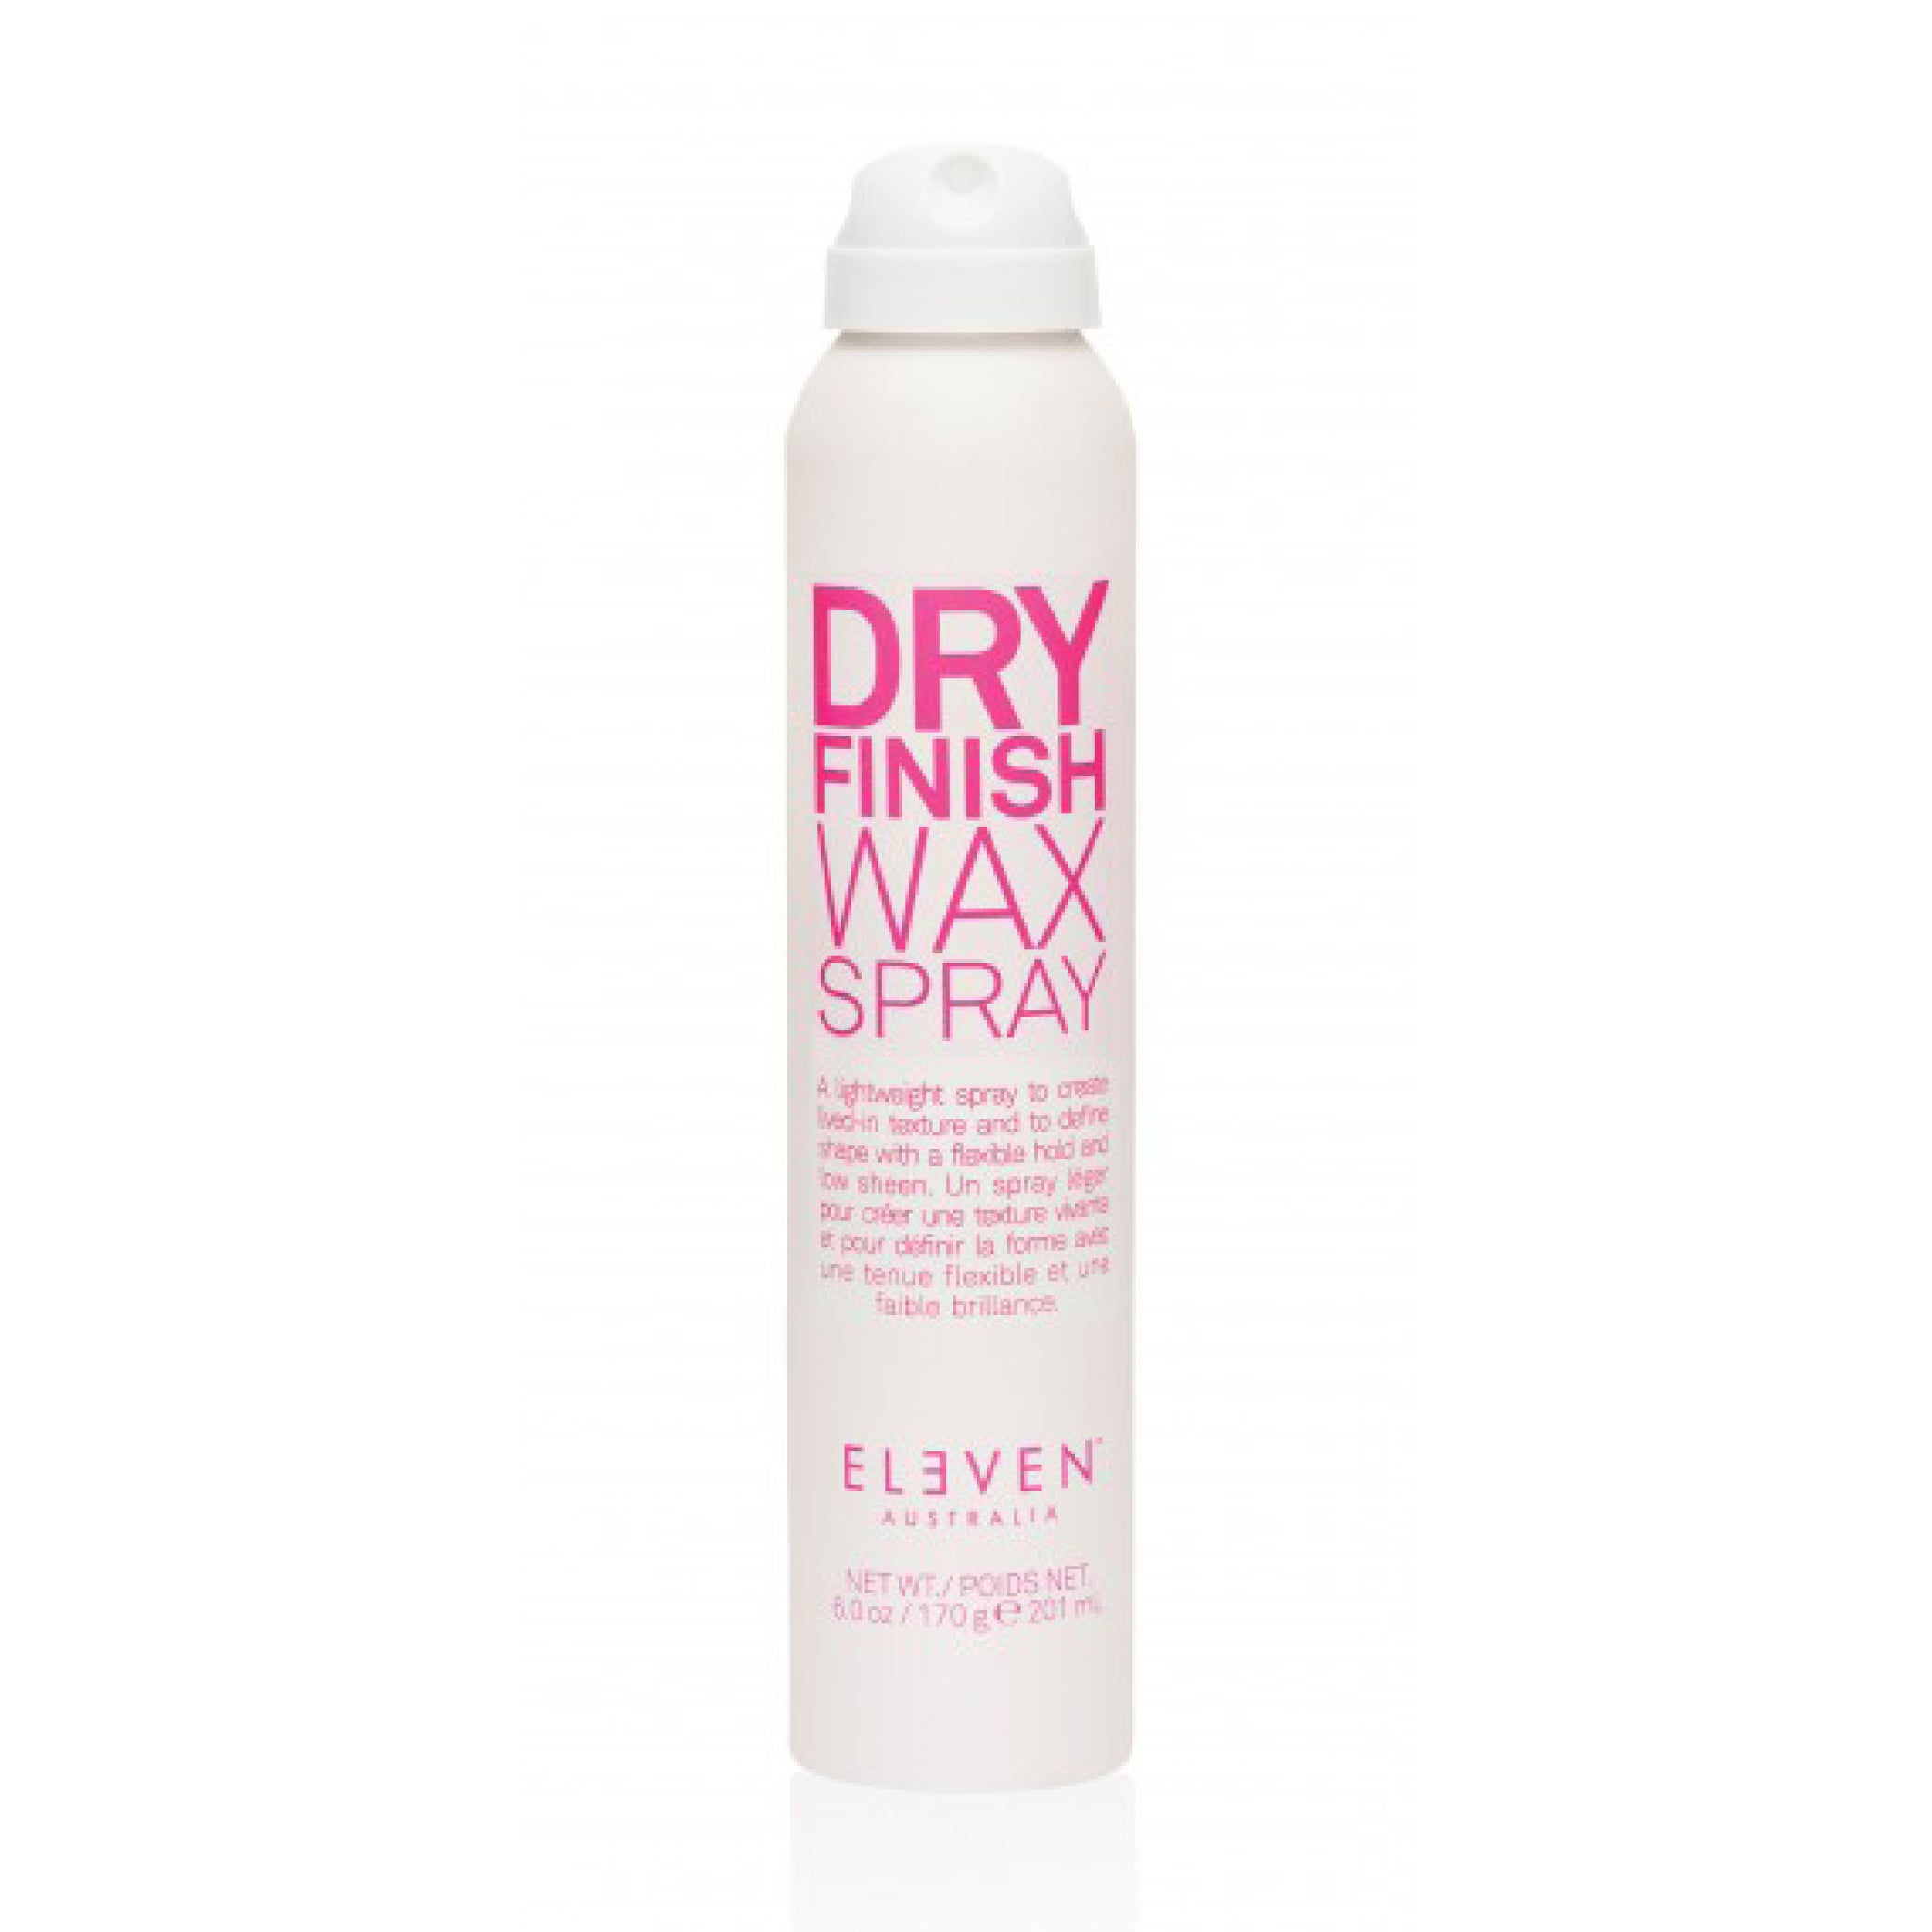 Spray de finition Dry Finish Wax